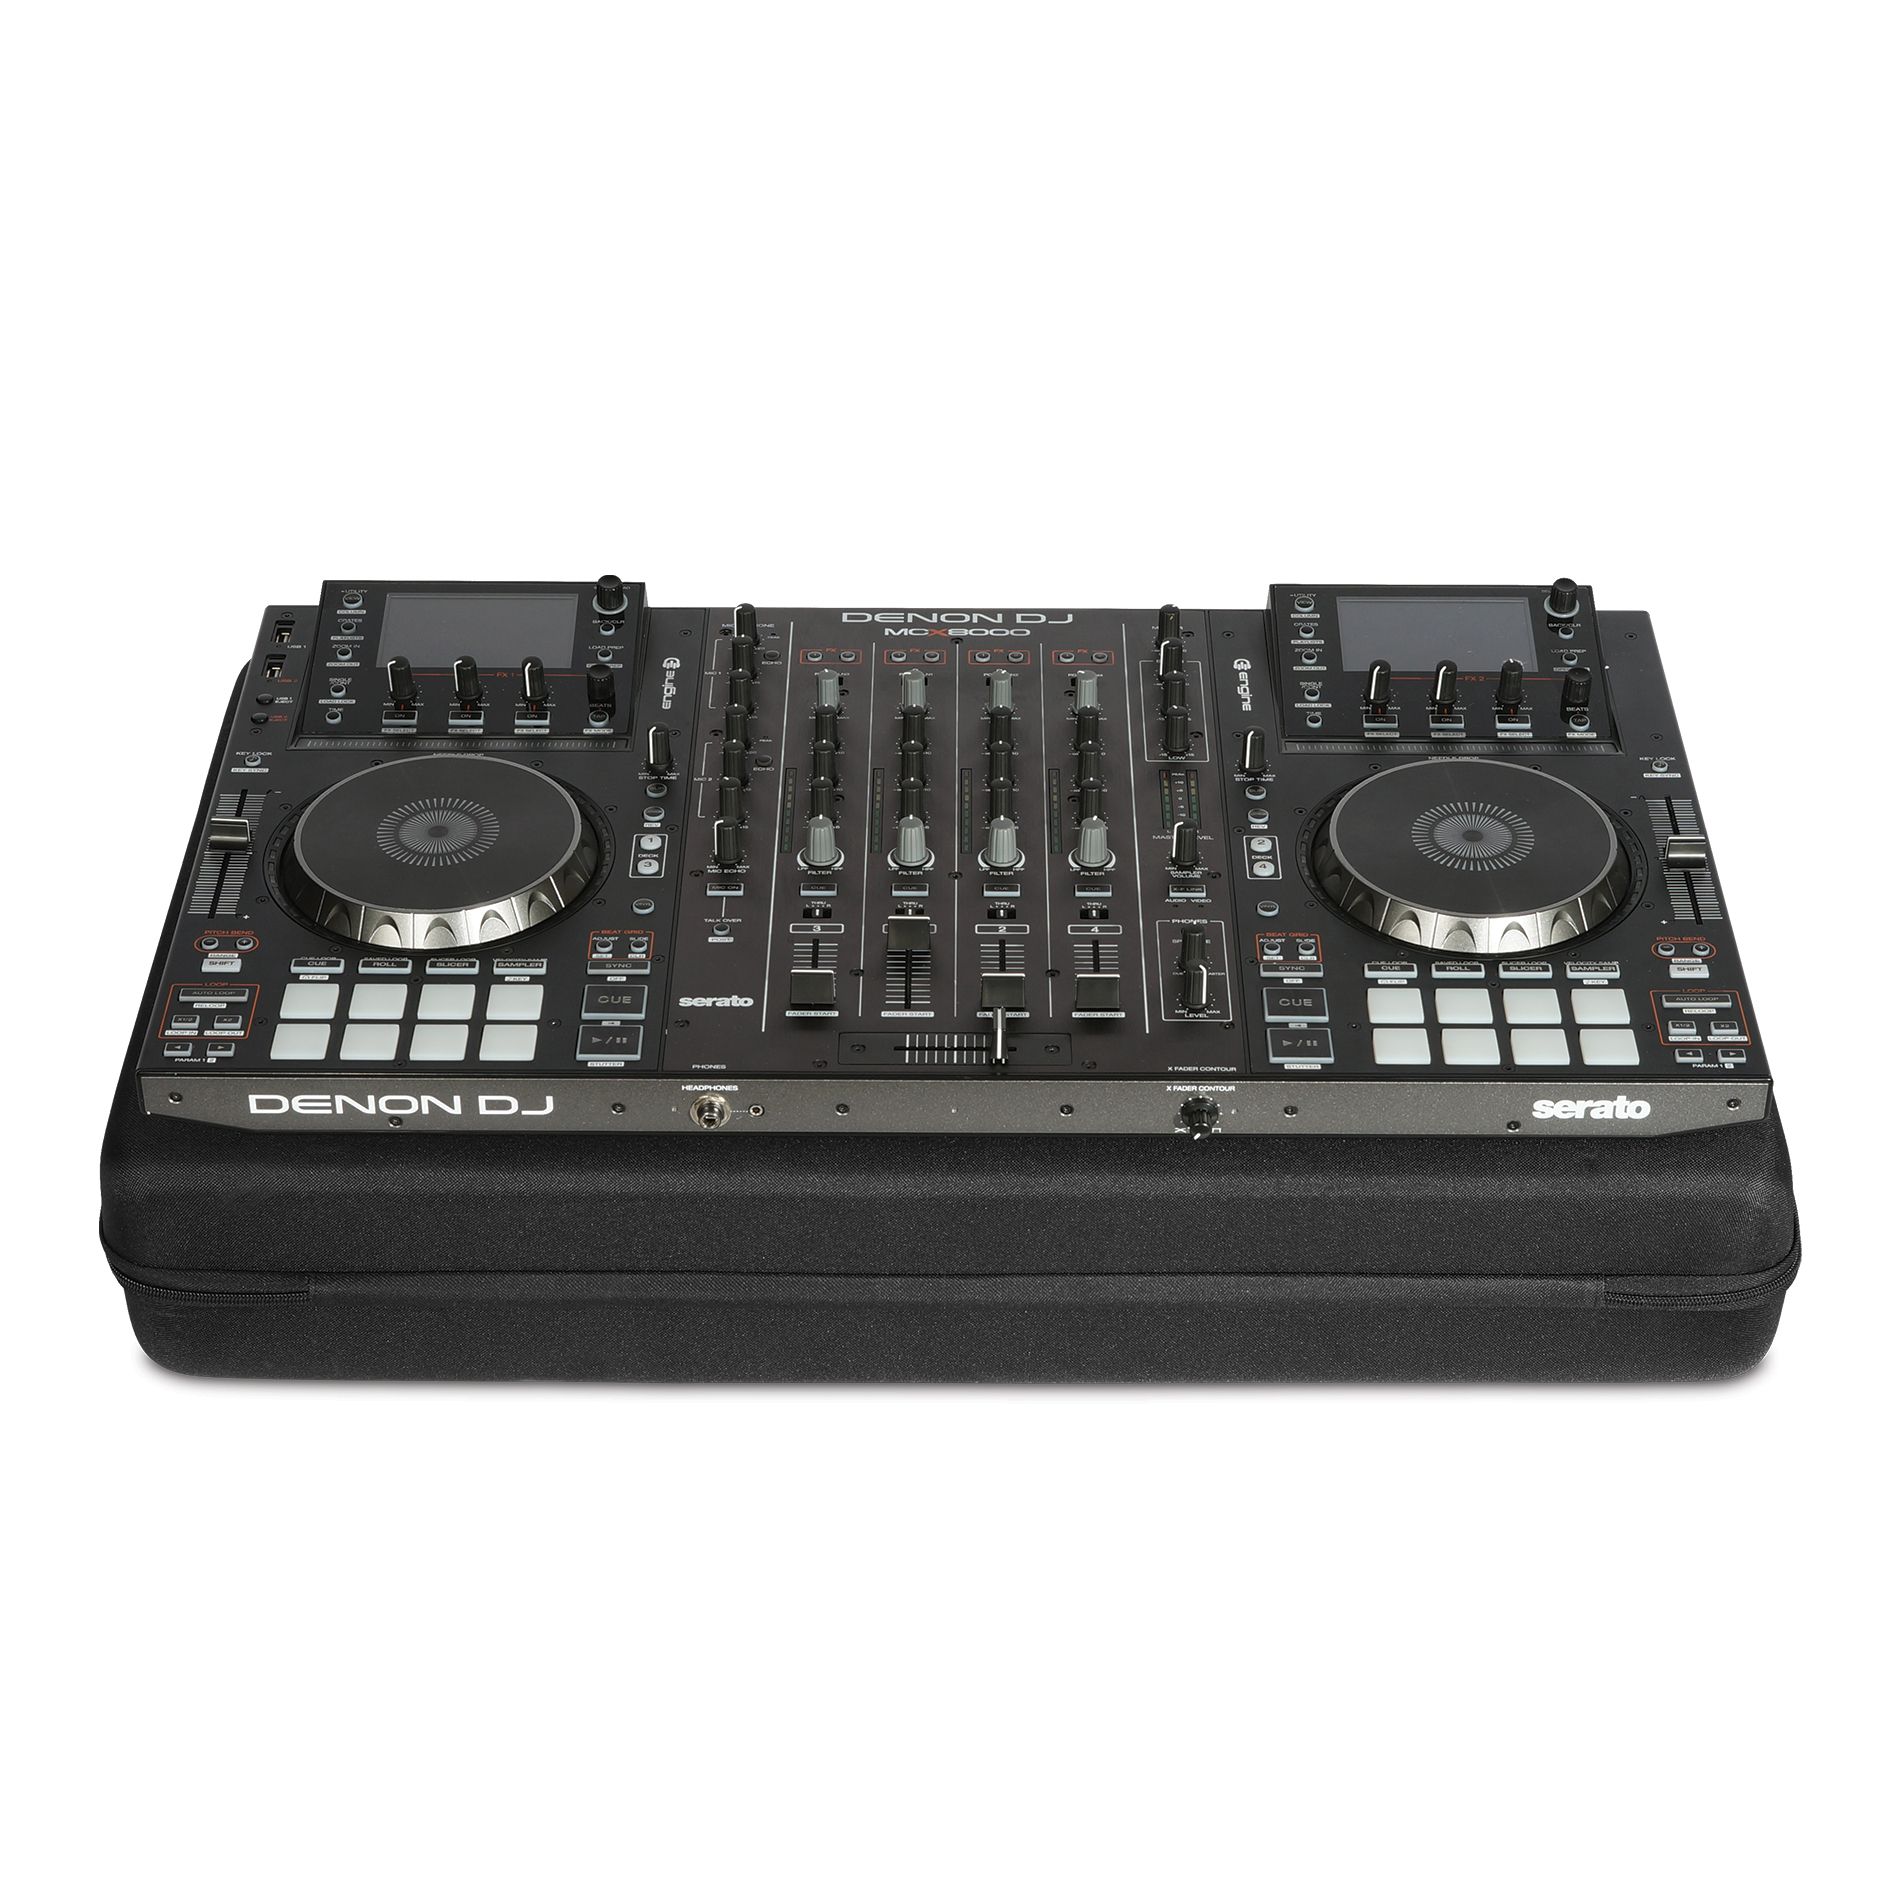 Udg U8305bl Pour Xdj-rx2 / Mcx8000 / Roland 808 - DJ-Tasche - Variation 2